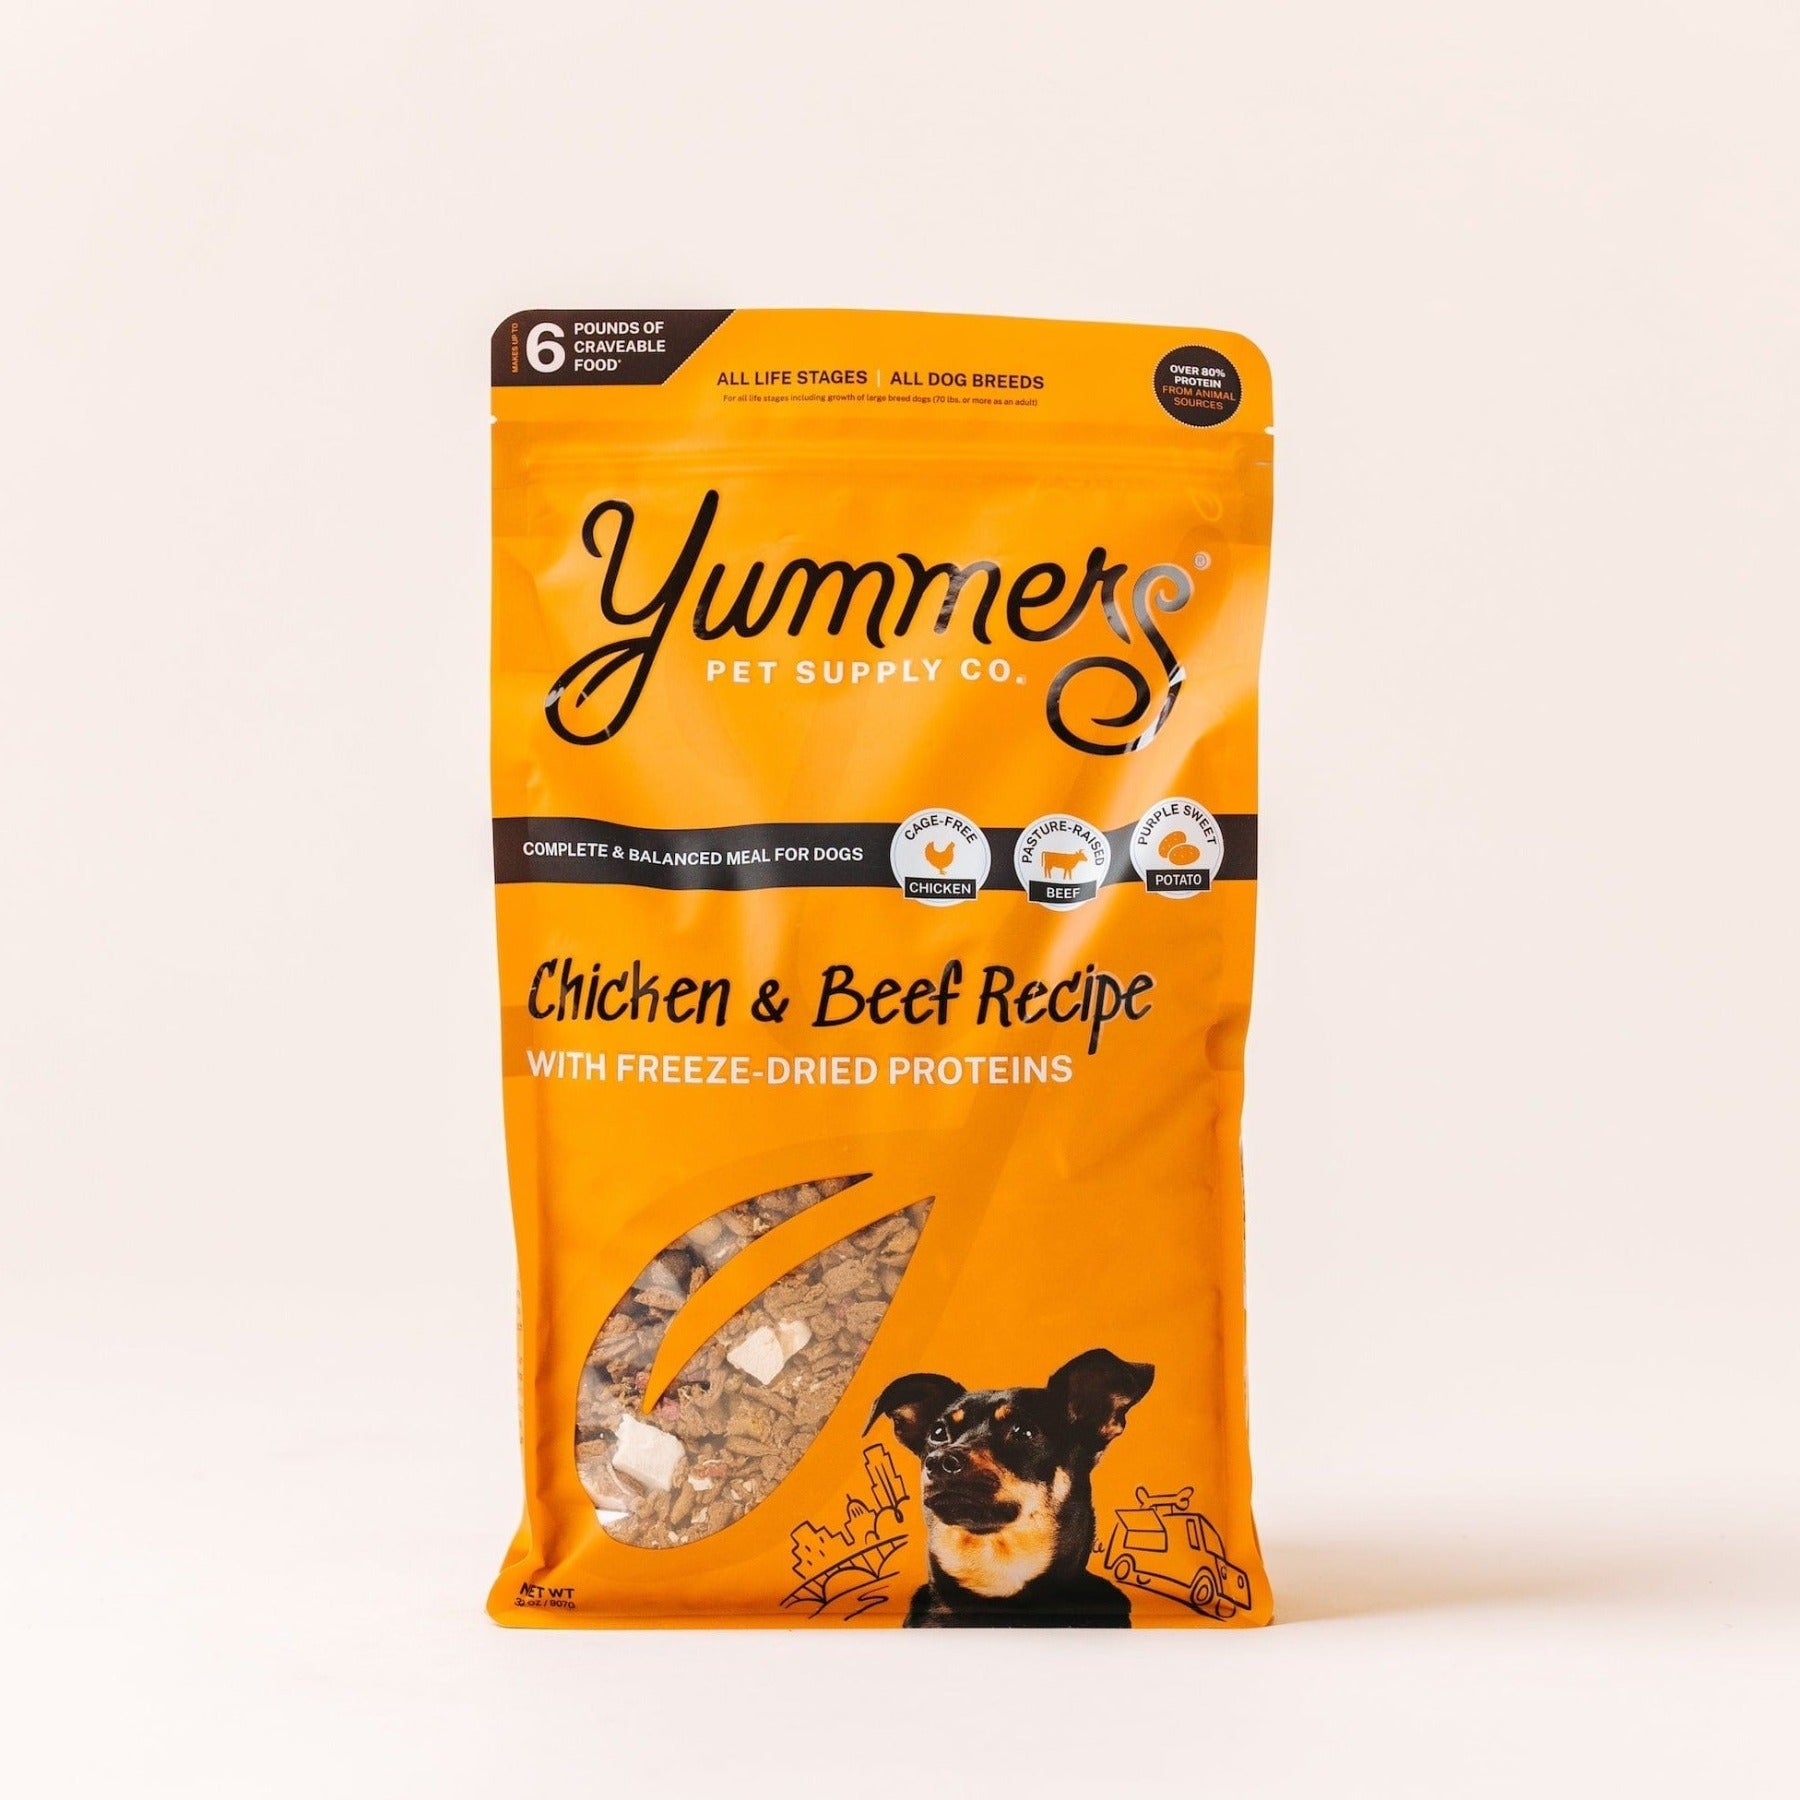 Yummers Chicken & Beef Dog Food